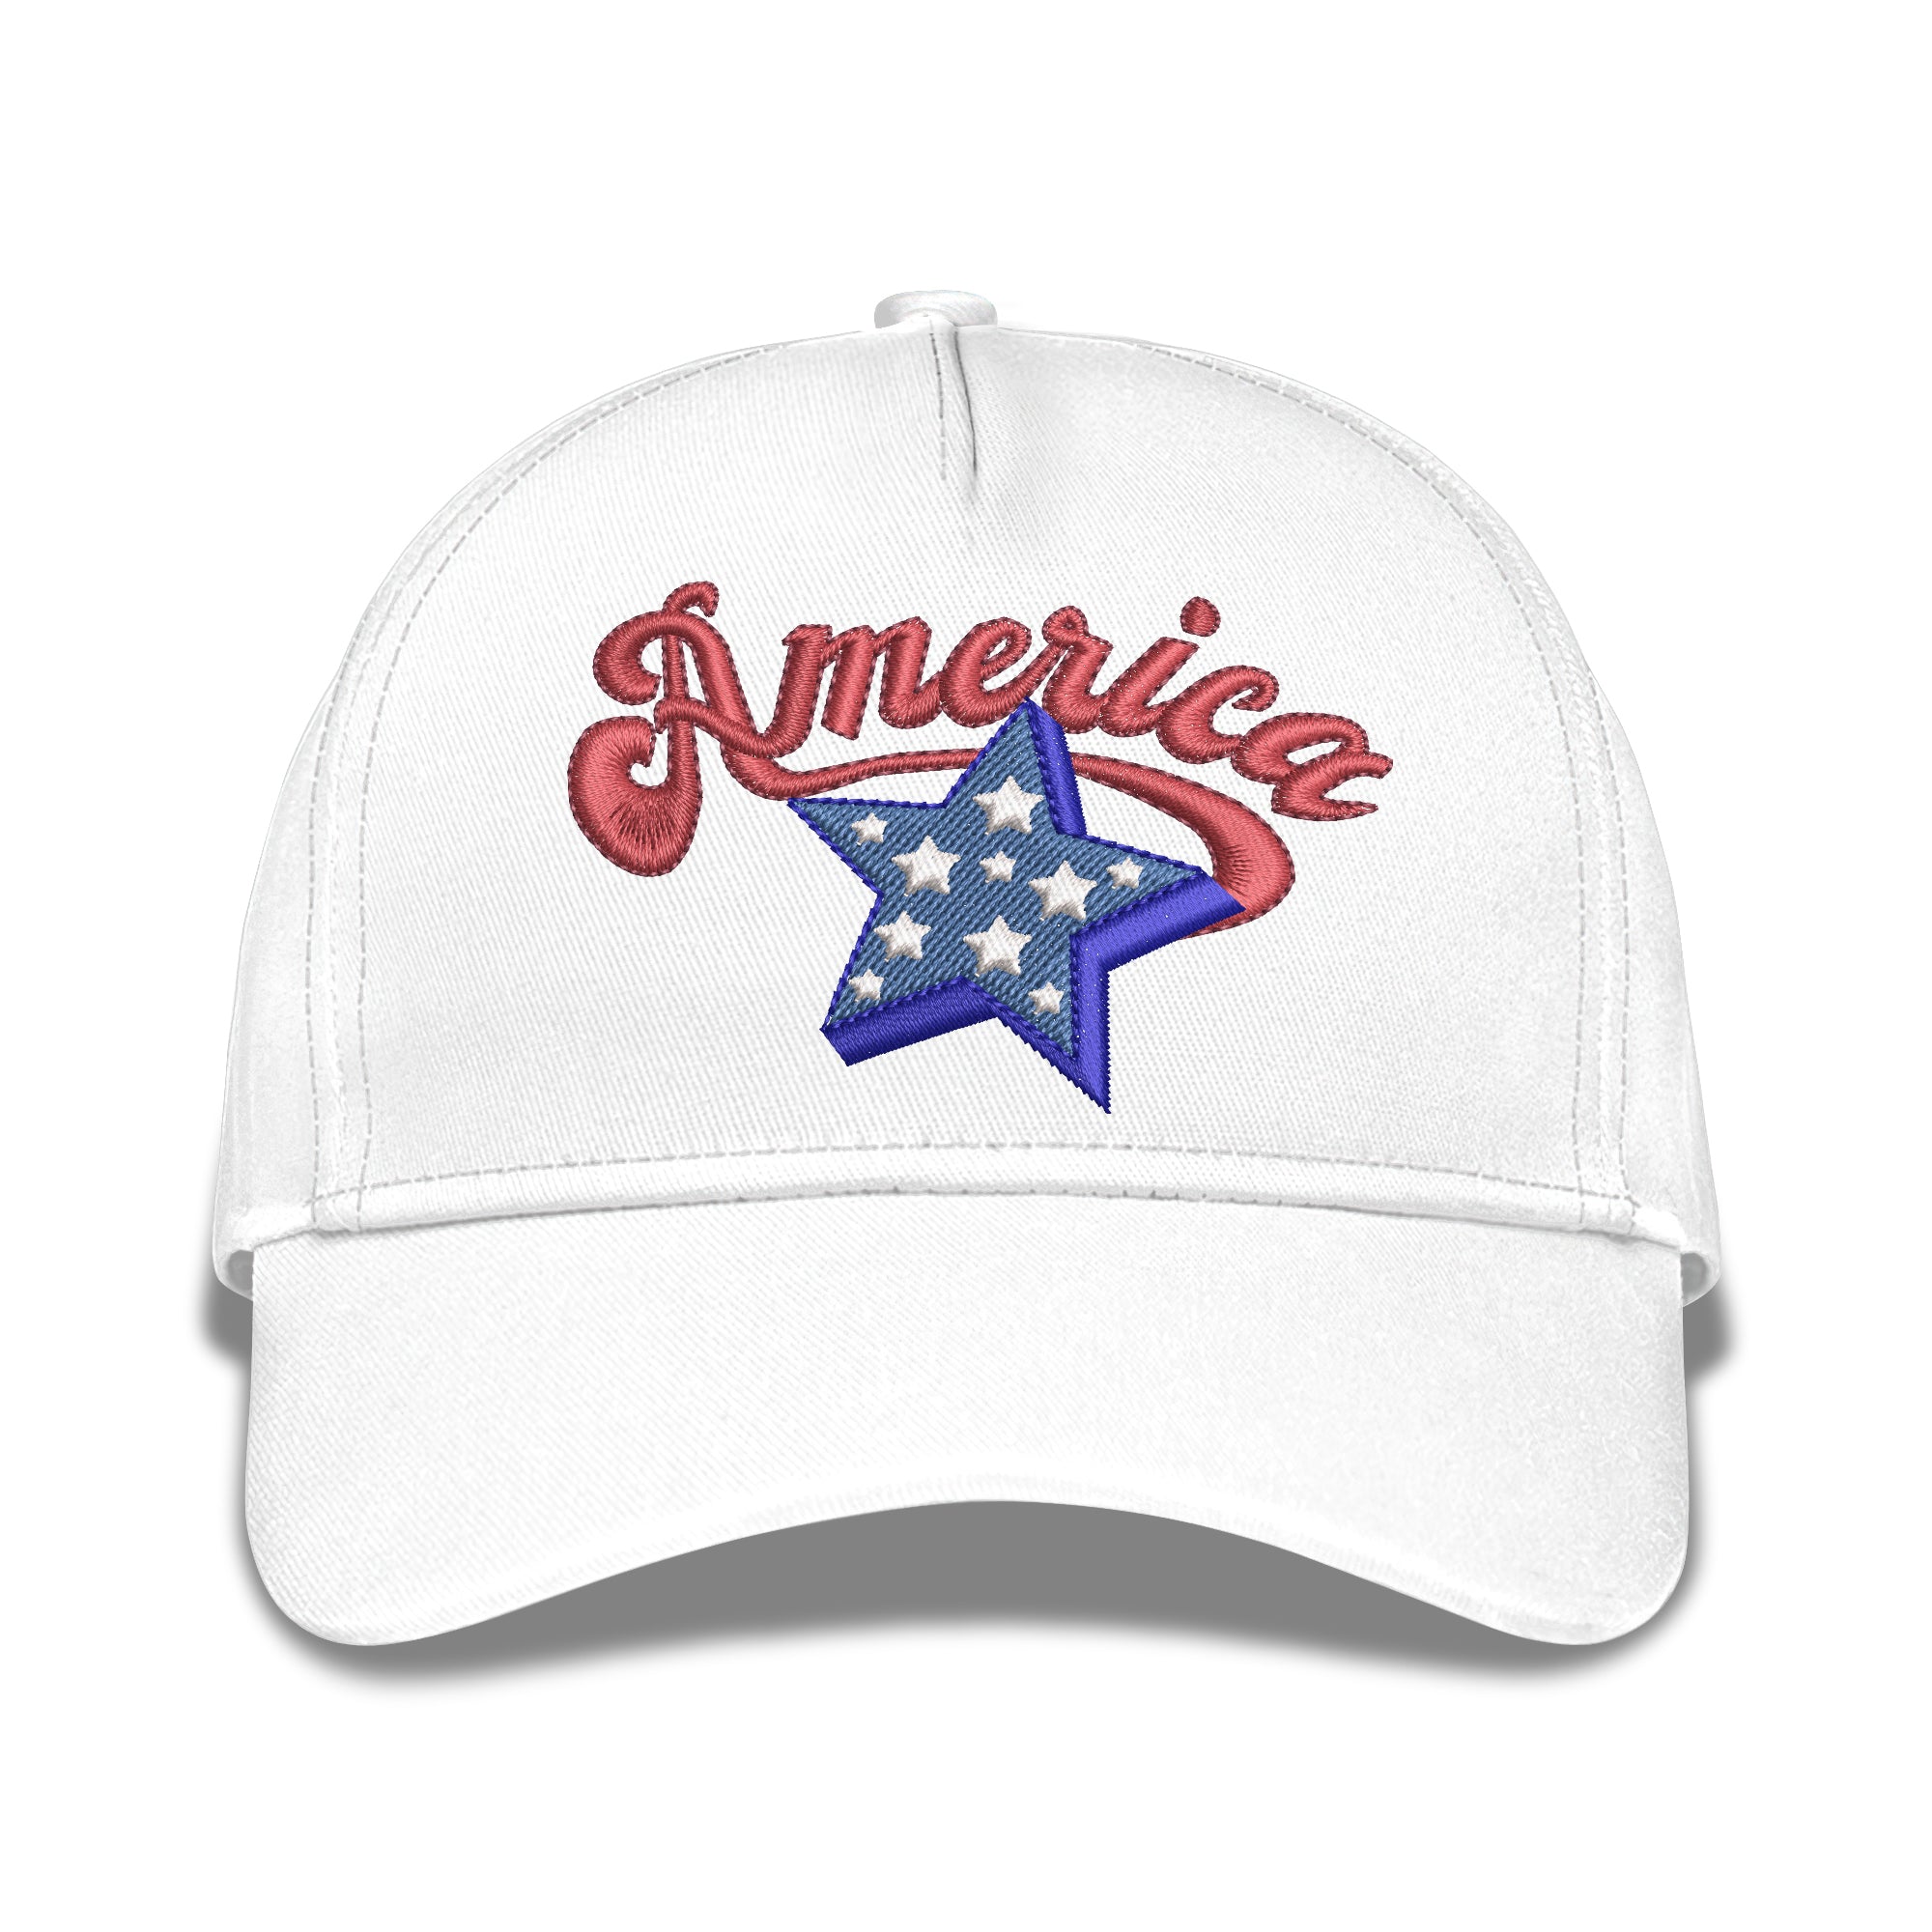 America Embroidered Baseball Caps